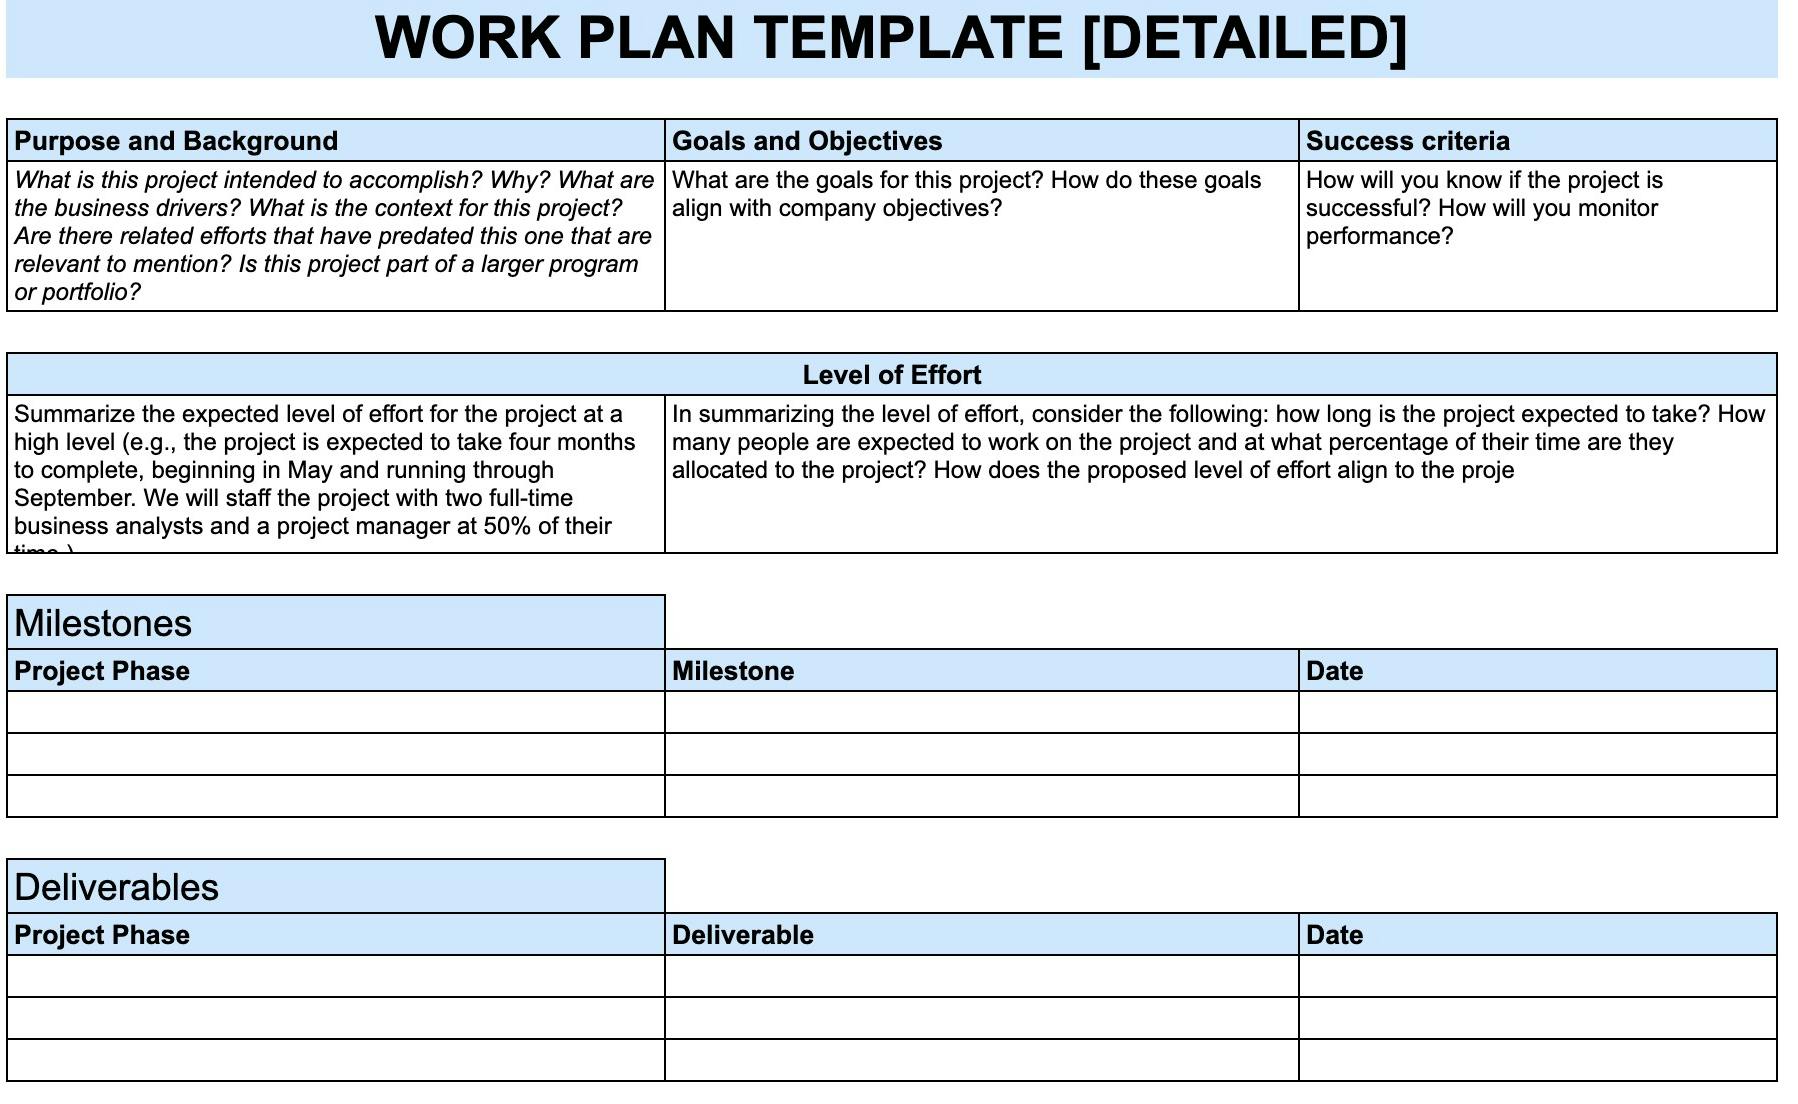 screenshot of a work plan template in spreadsheet format